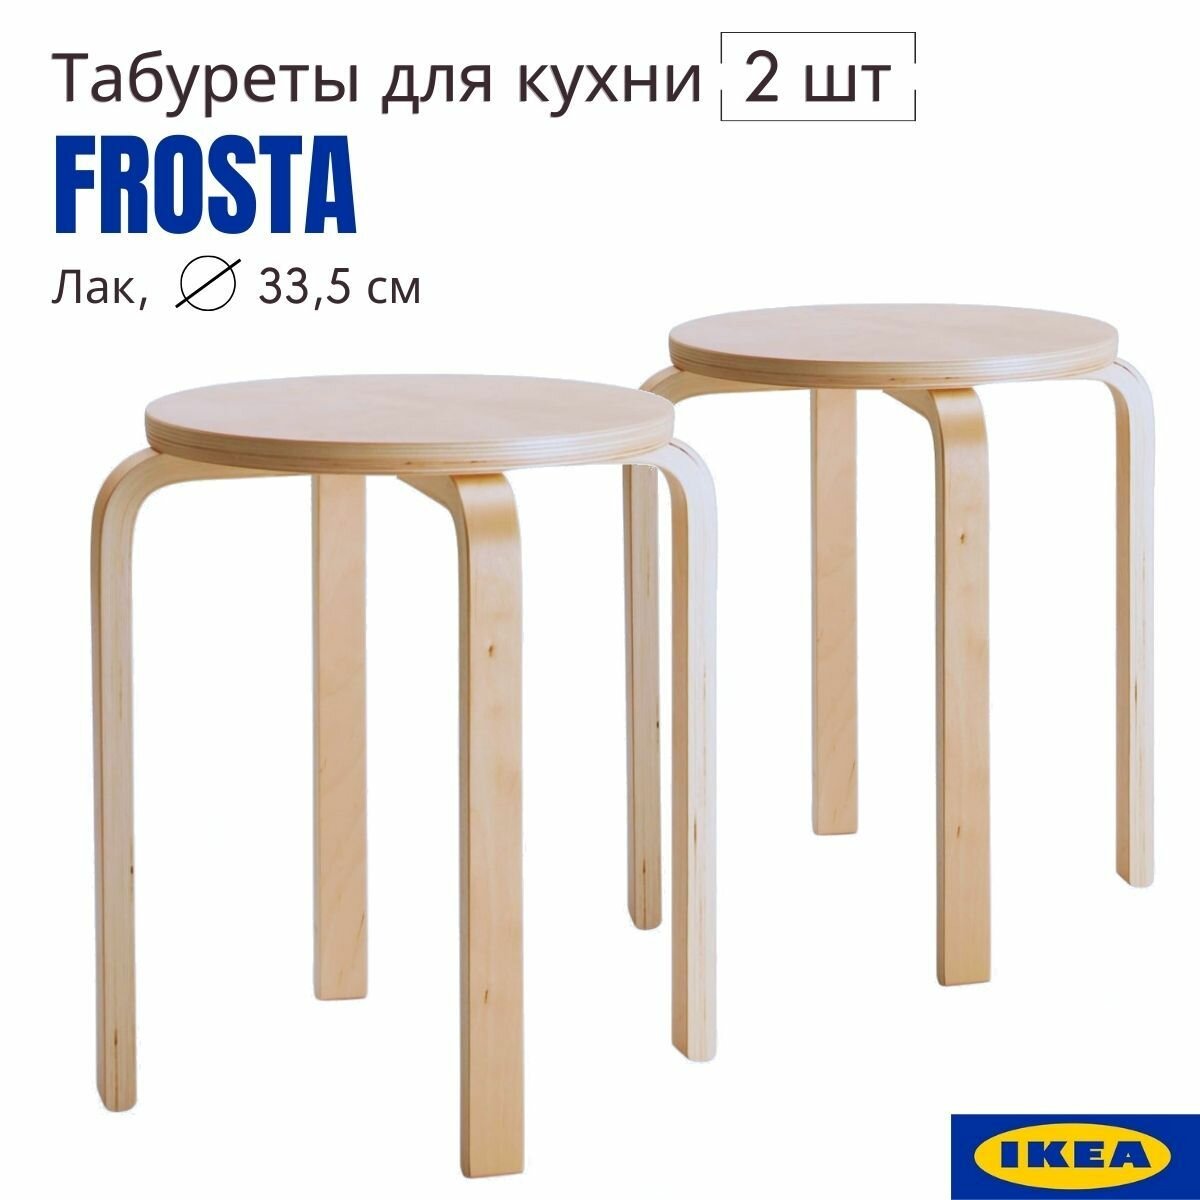 Табурет для кухни 2 шт аналог IKEA FROSTA (икеа фроста) деревянный табурет комплект табуретов 33x45 лак